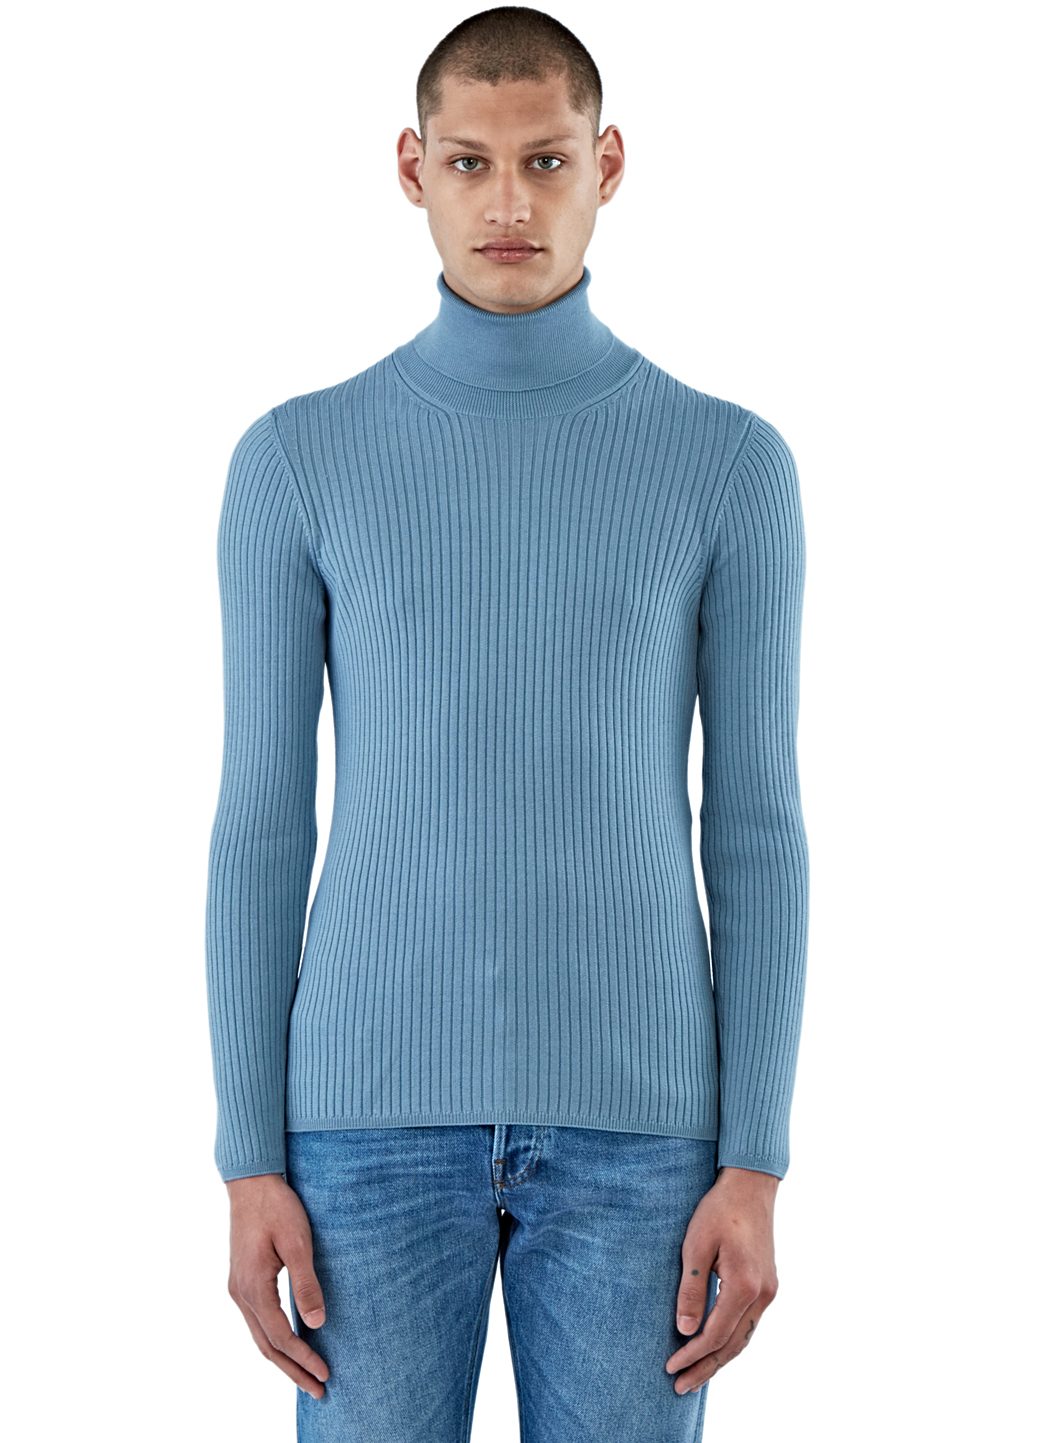 Trendy Men's Sweater 2018 Autumn Winter New High neck Long